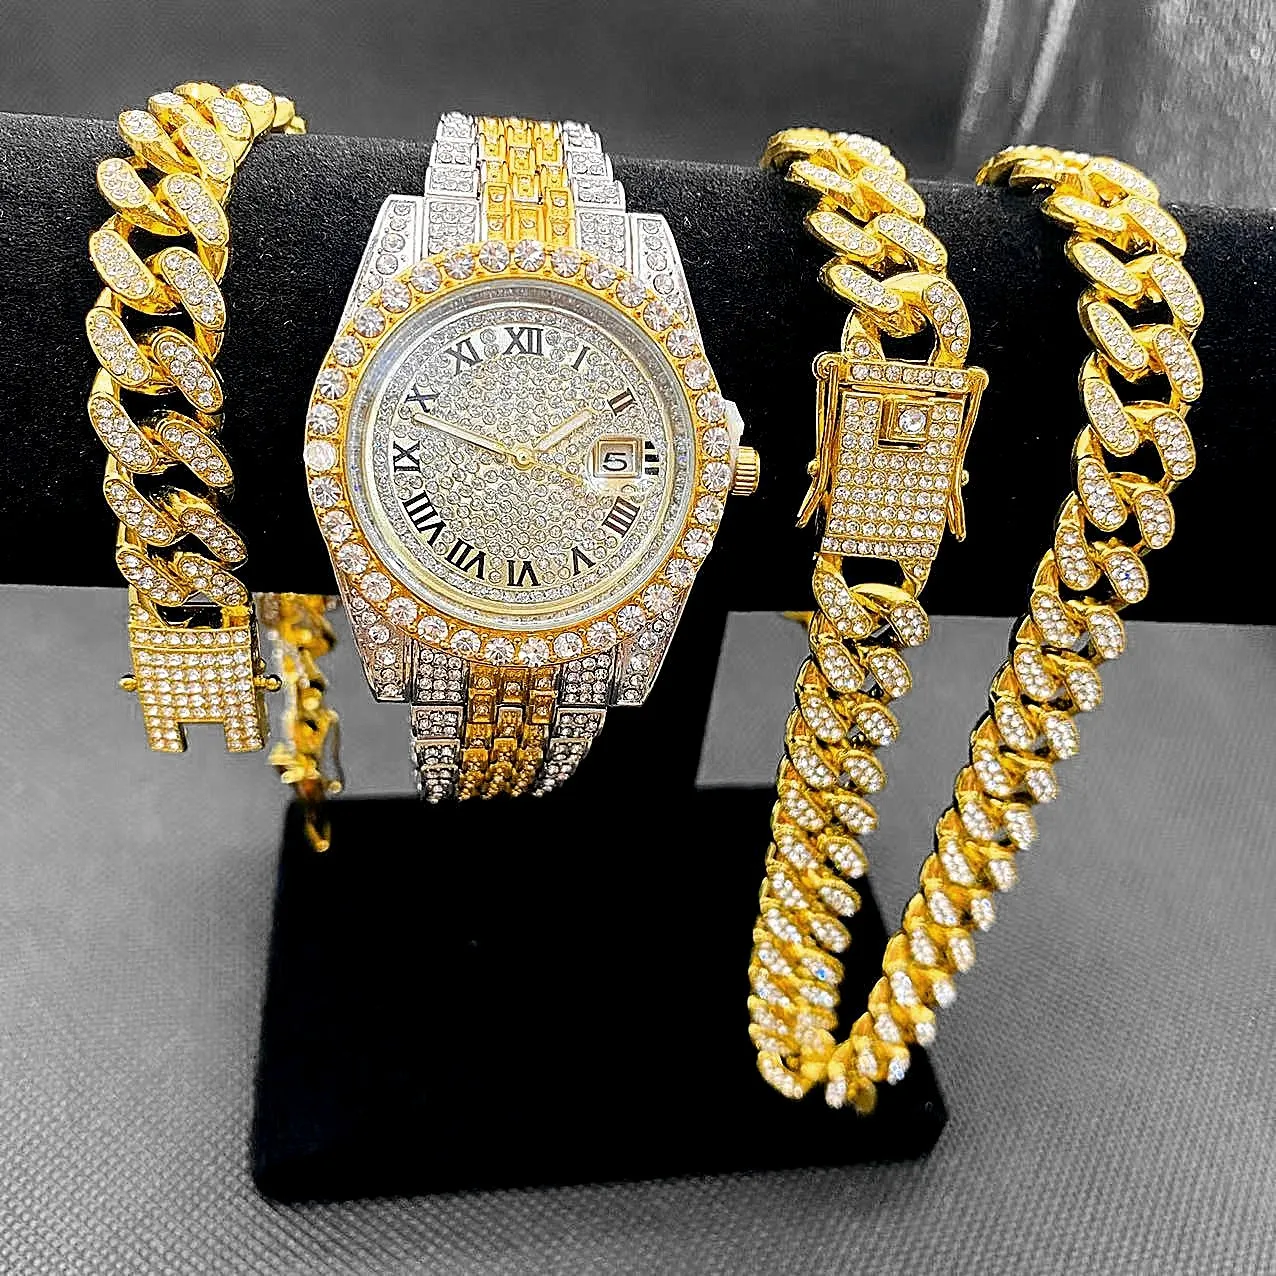 FREE SAMPLE New Fashion Men Cuban Hip Hop Style Wristwatches Bracelet Necklaces Set Male Gift Watch